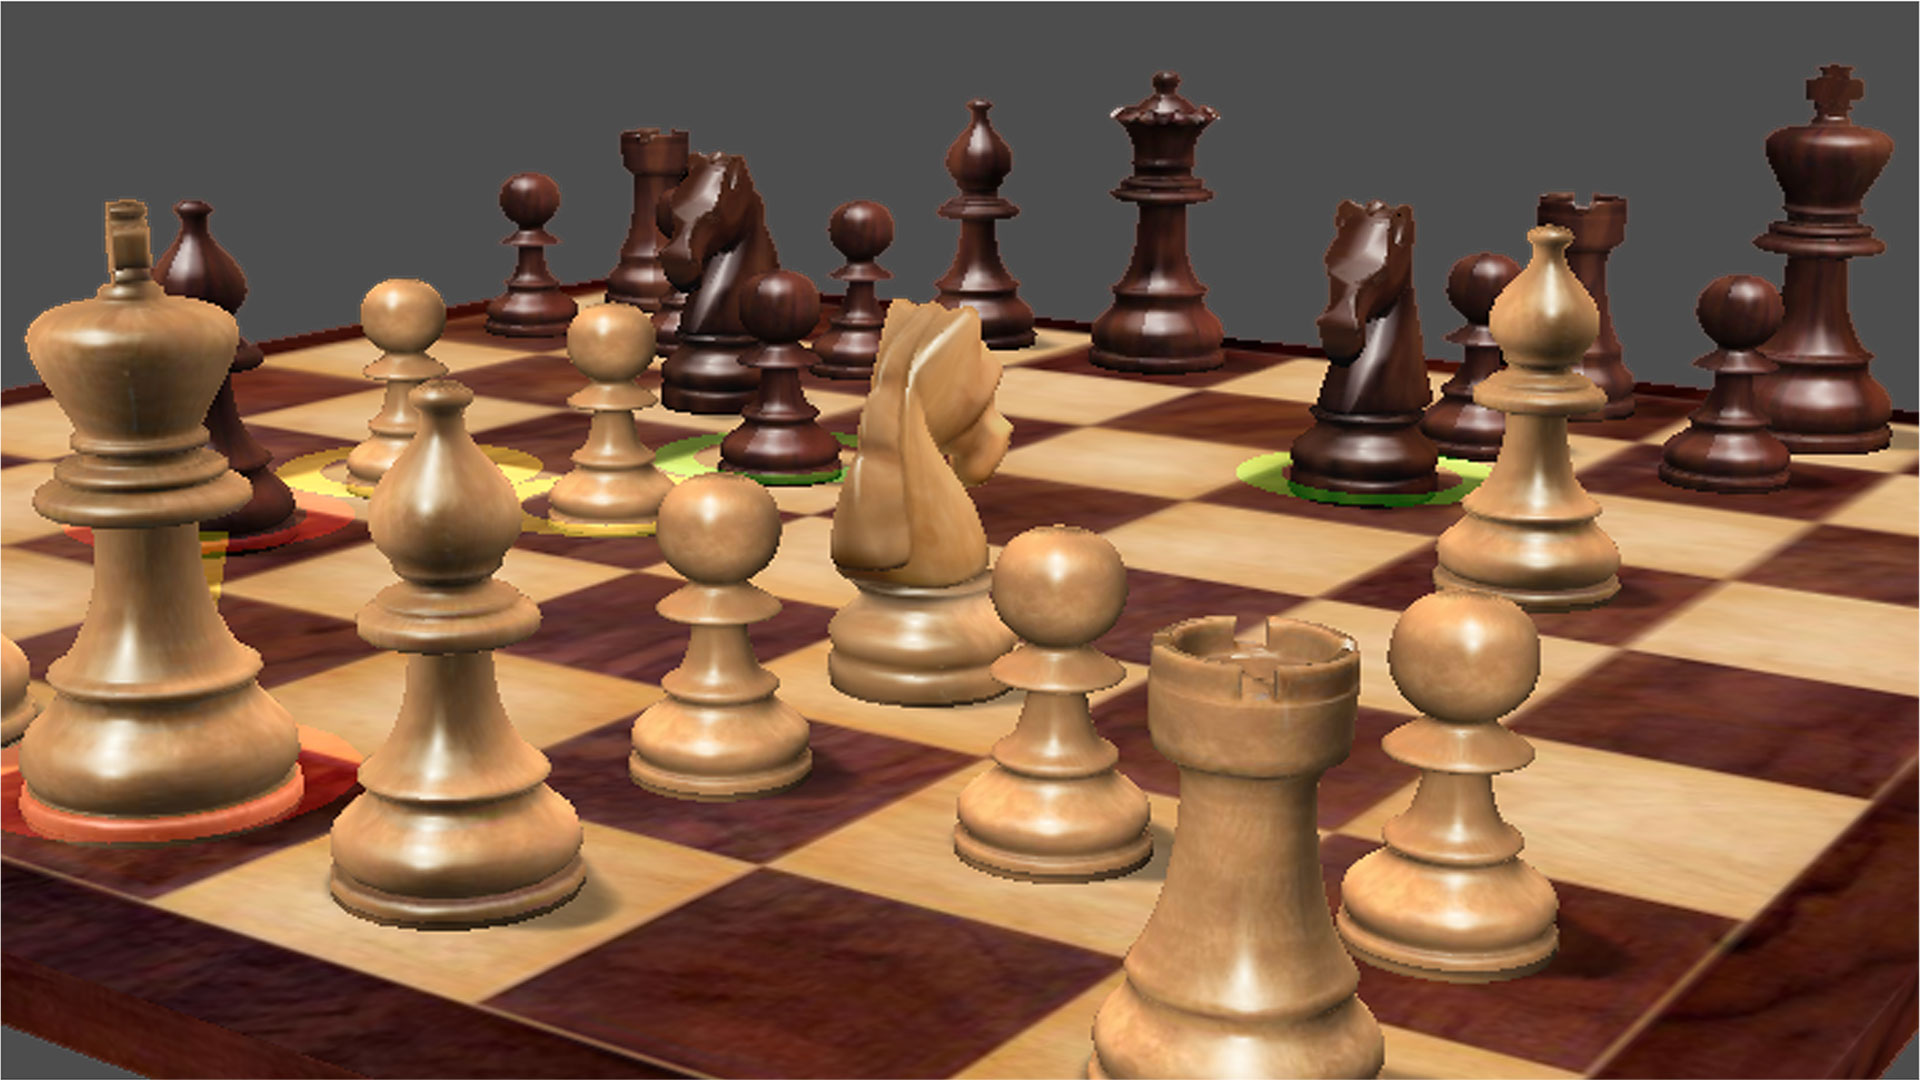 Steam 社群 :: FPS Chess